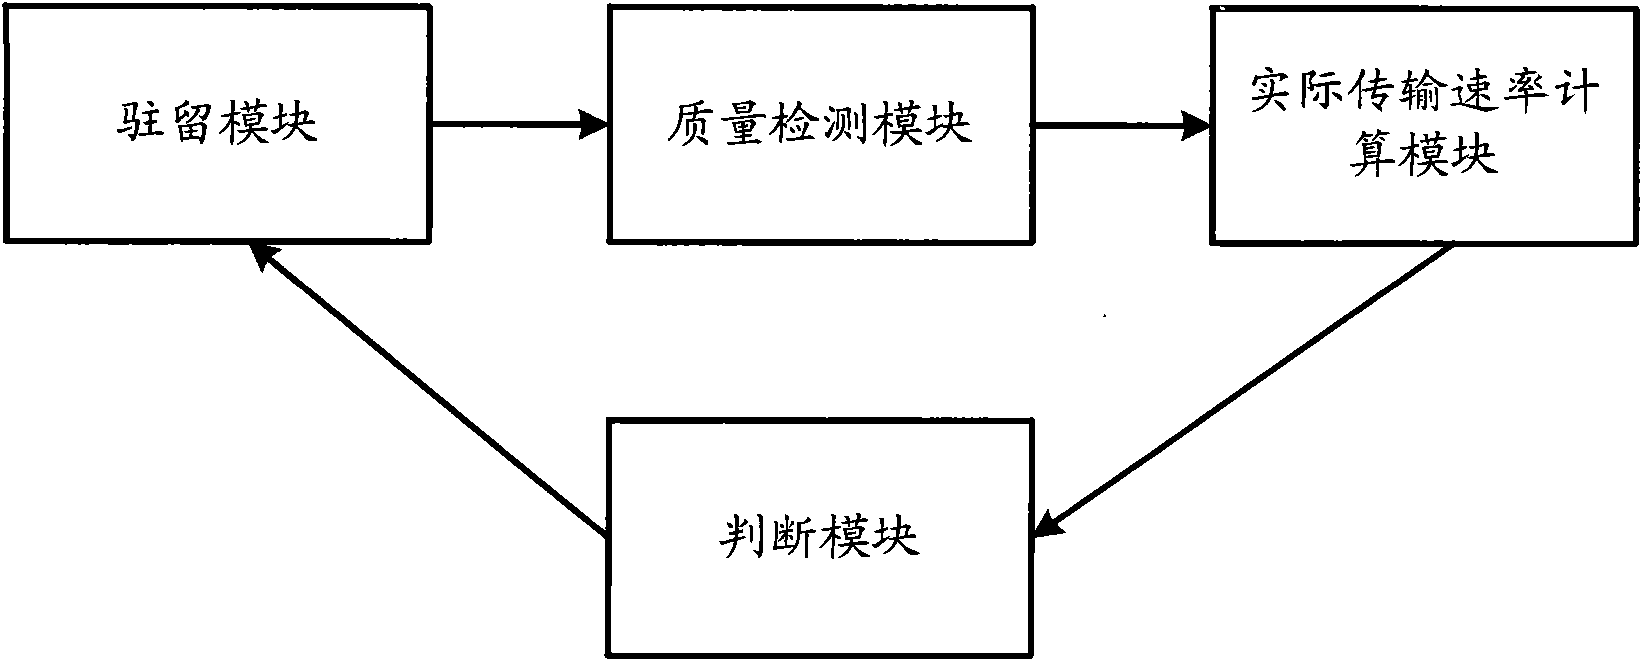 Data service transmission method of dual-mode terminal and dual-mode terminal